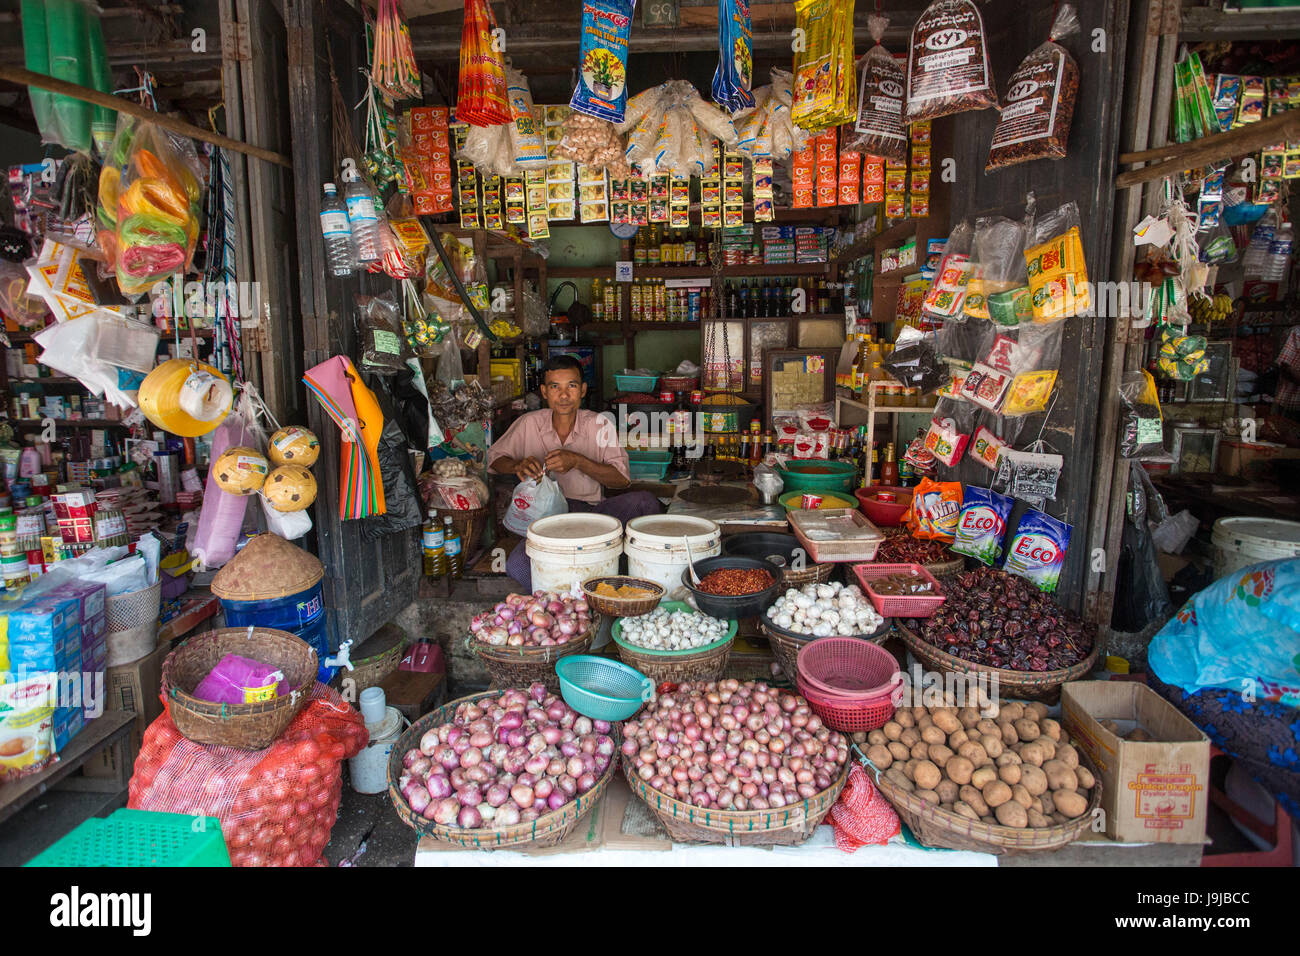 Myanmar, Yangon City, groceries shop Stock Photo